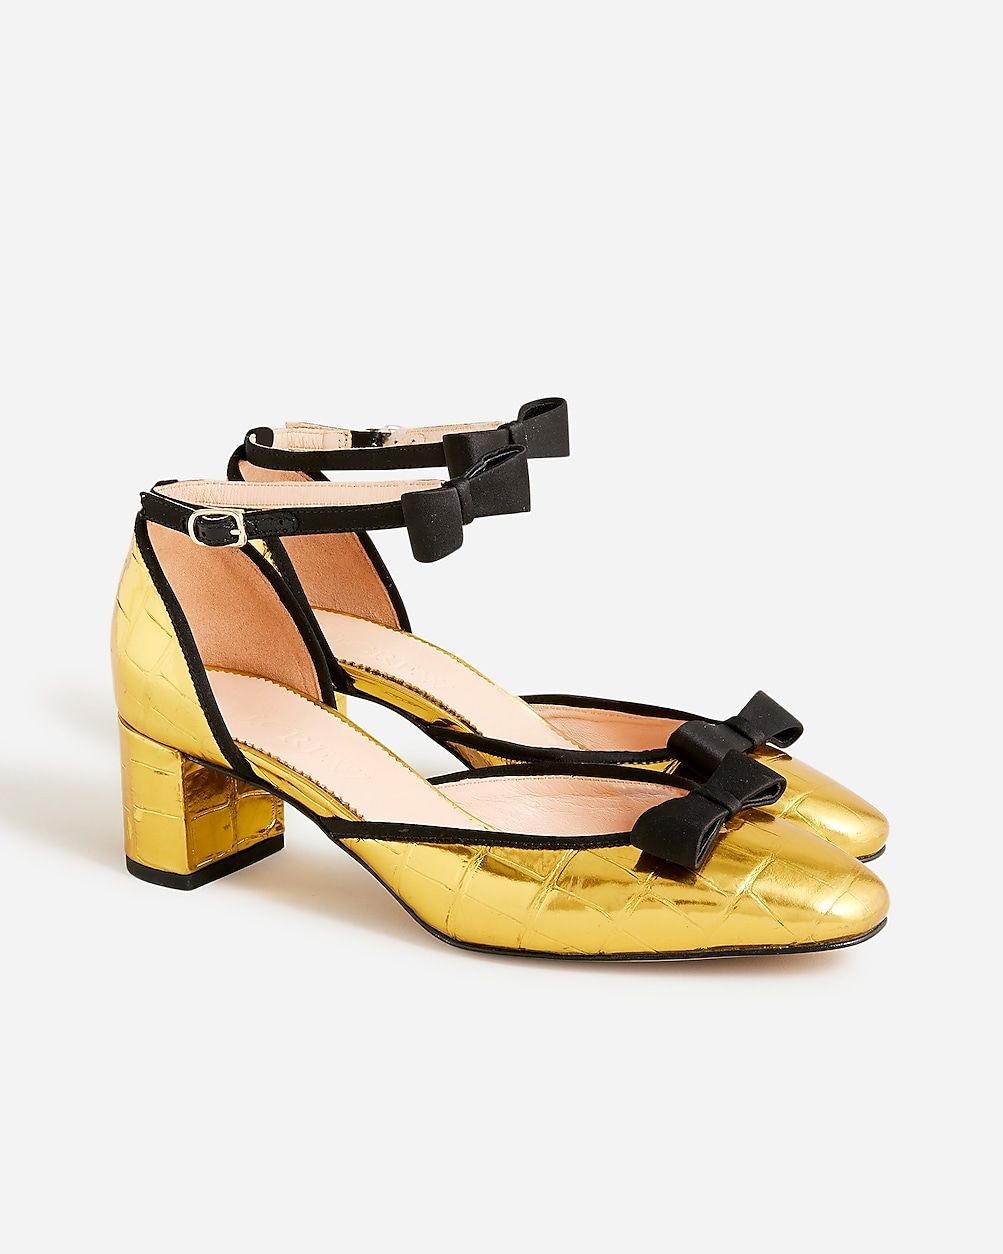 Millie bow ankle-strap heels in metallic croc-embossed leather | J.Crew US